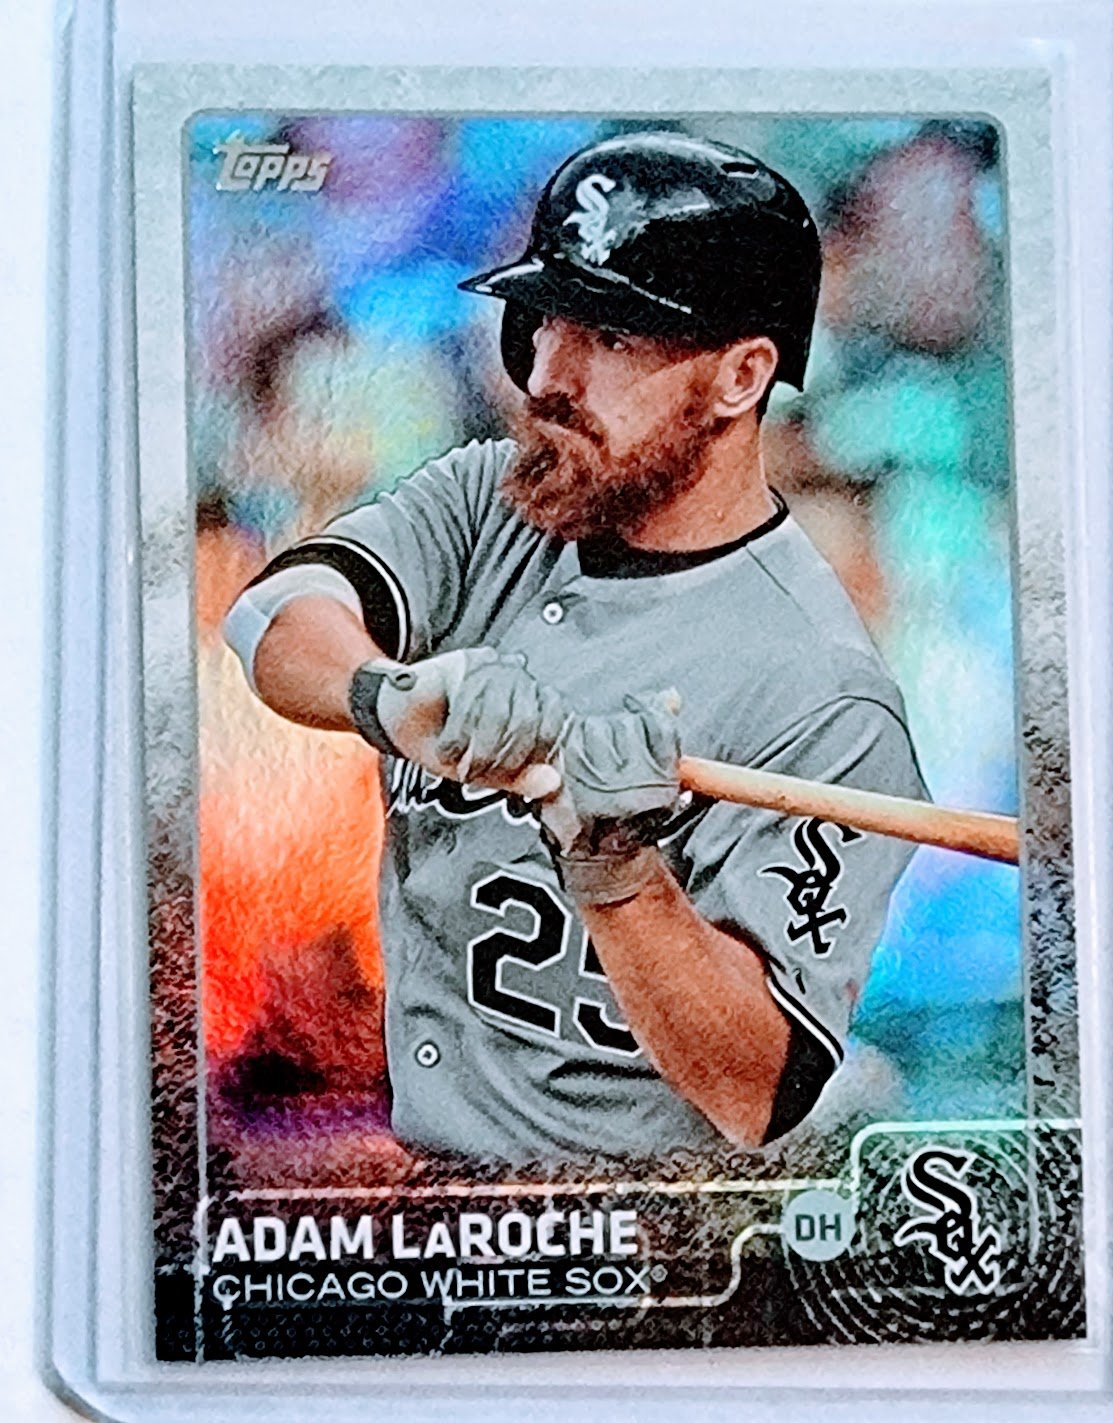 2015 Topps Adam LaRoche Foil Refractor Baseball Card TPTV simple Xclusive Collectibles   